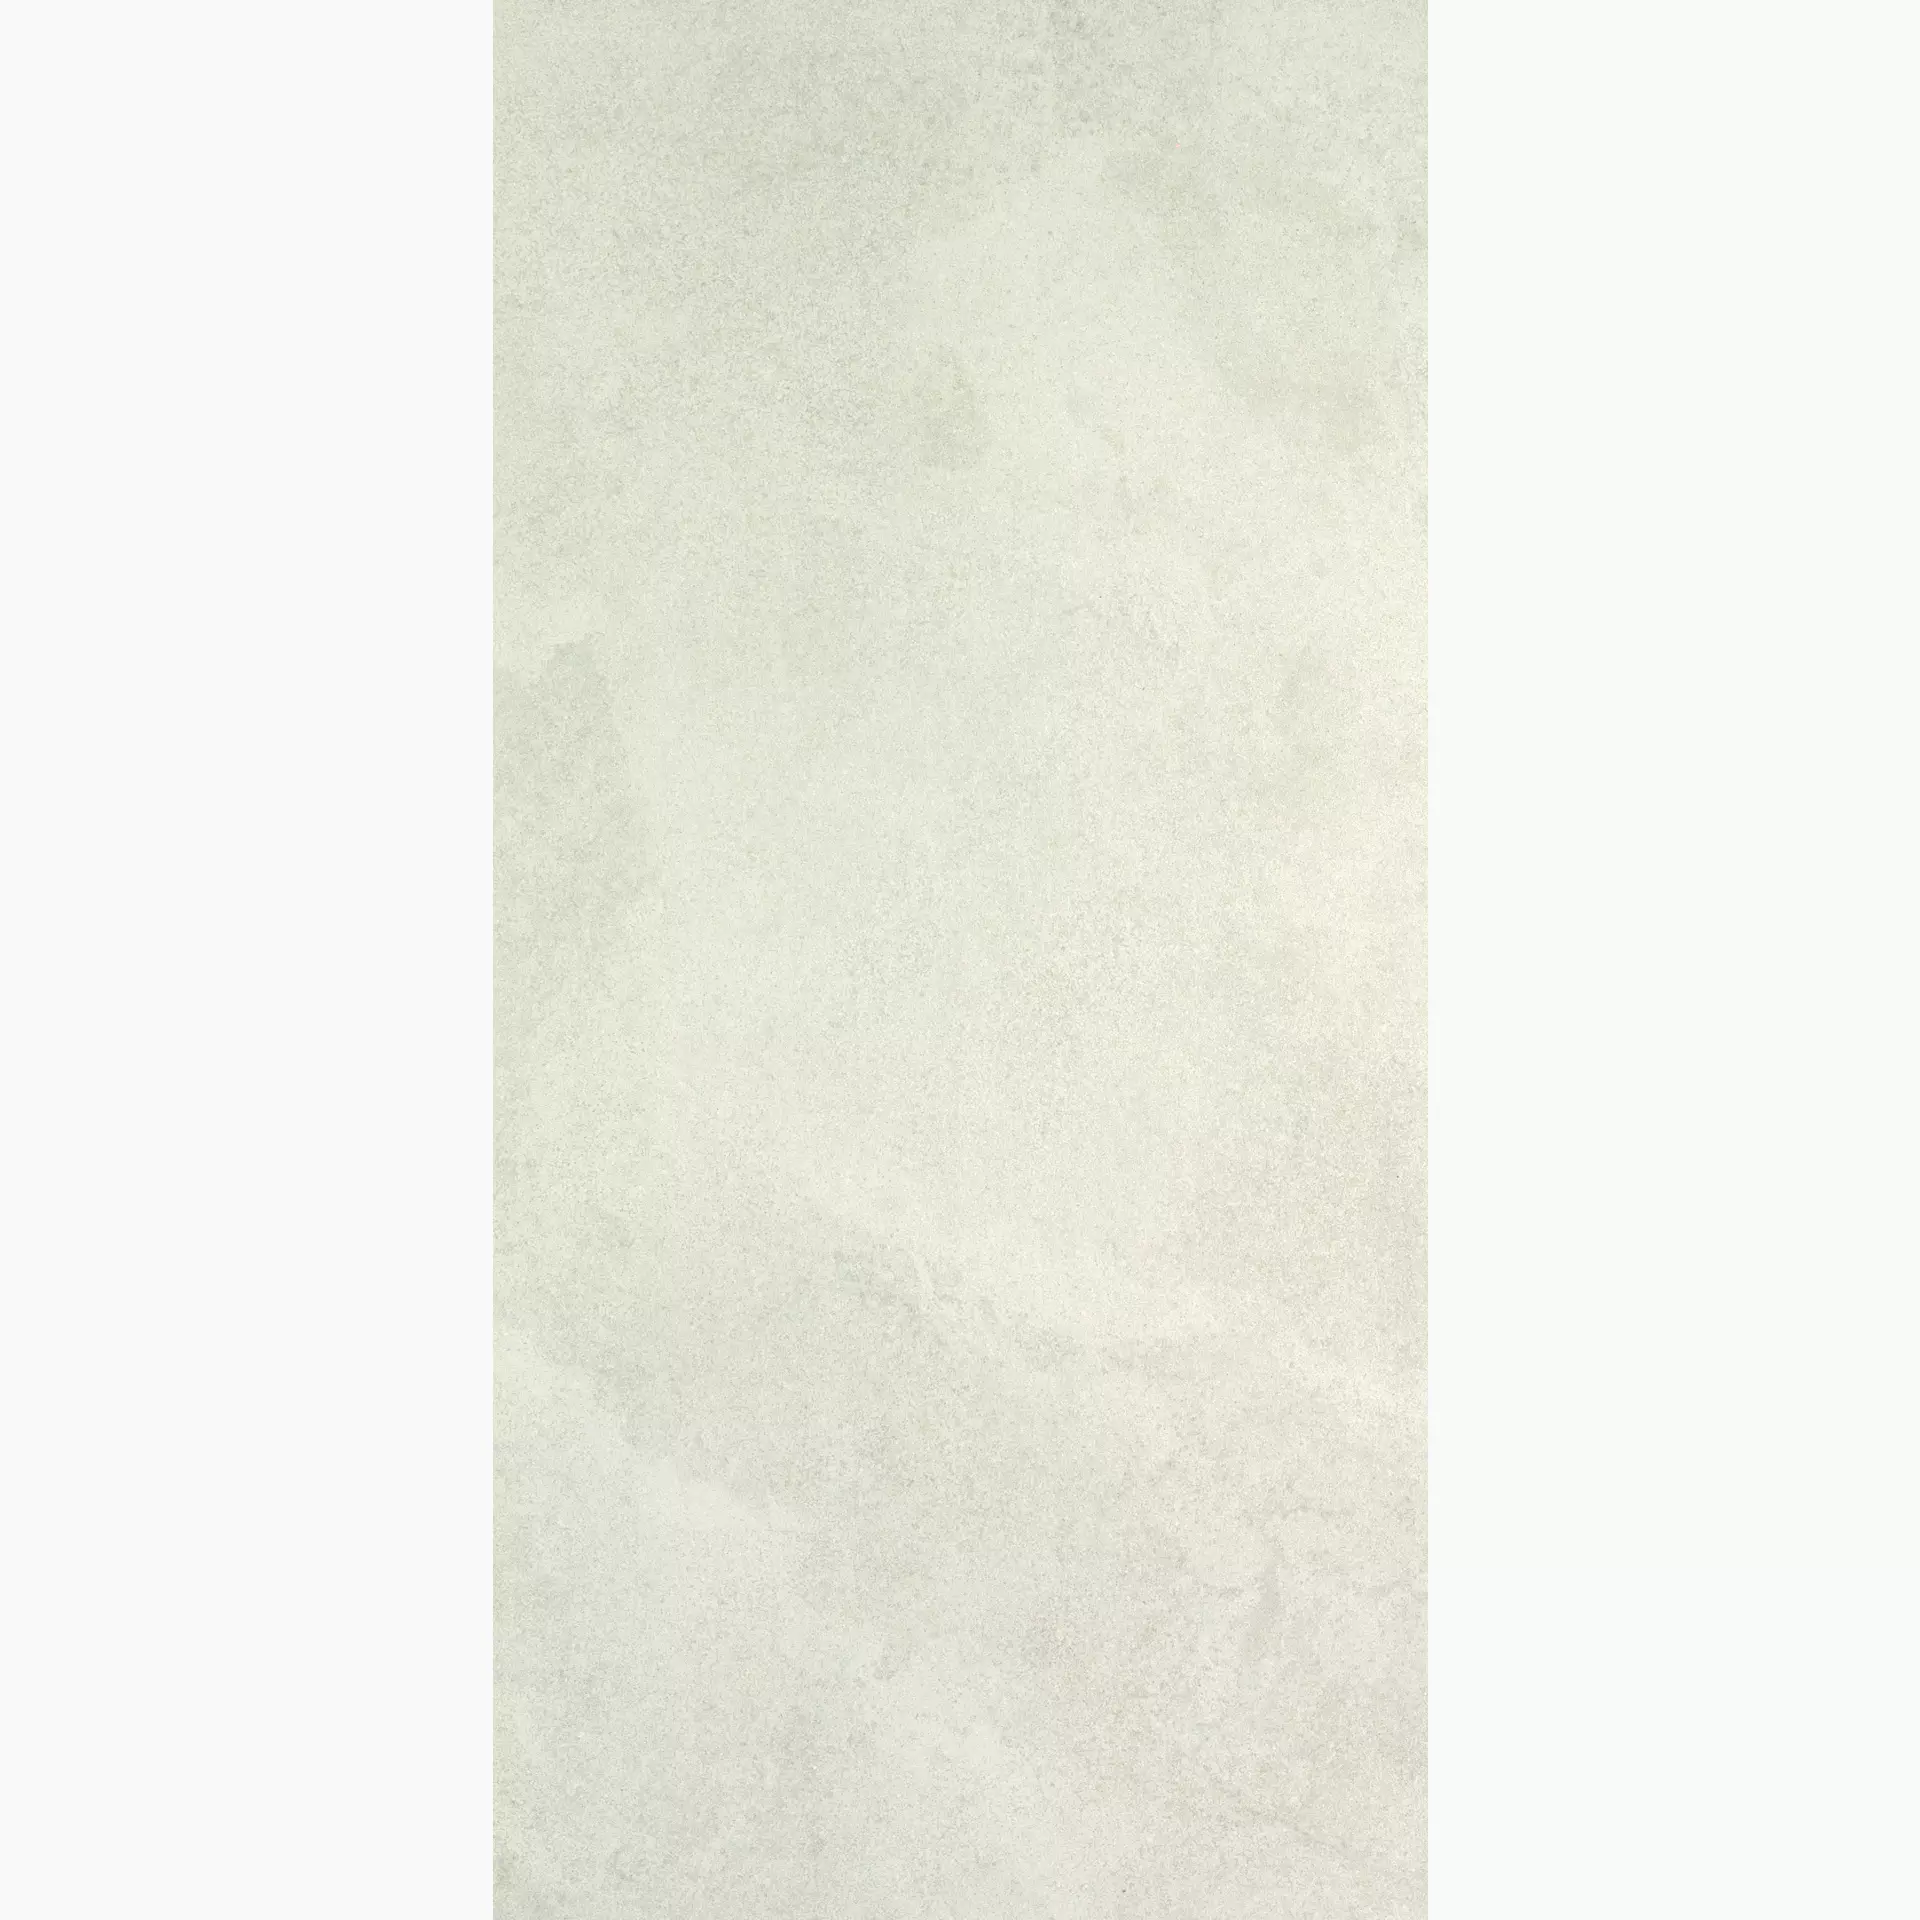 Ergon Stone Project White Lappato Controfalda White E6KV gelaeppt 60x120cm rektifiziert 9,5mm